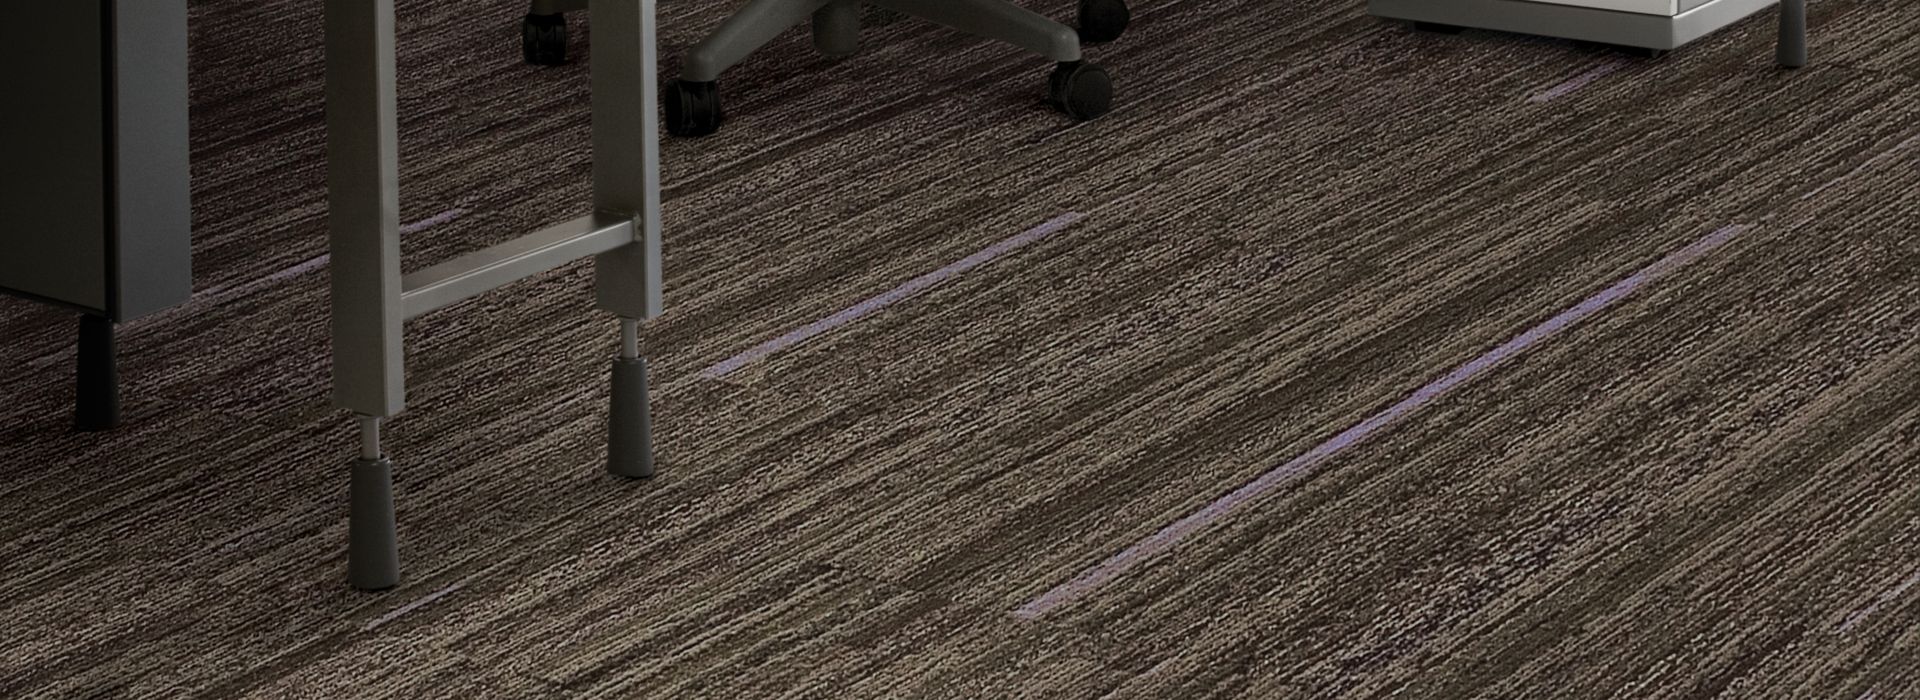 Interface Reincarnation carpet tile in office cubicle area imagen número 1